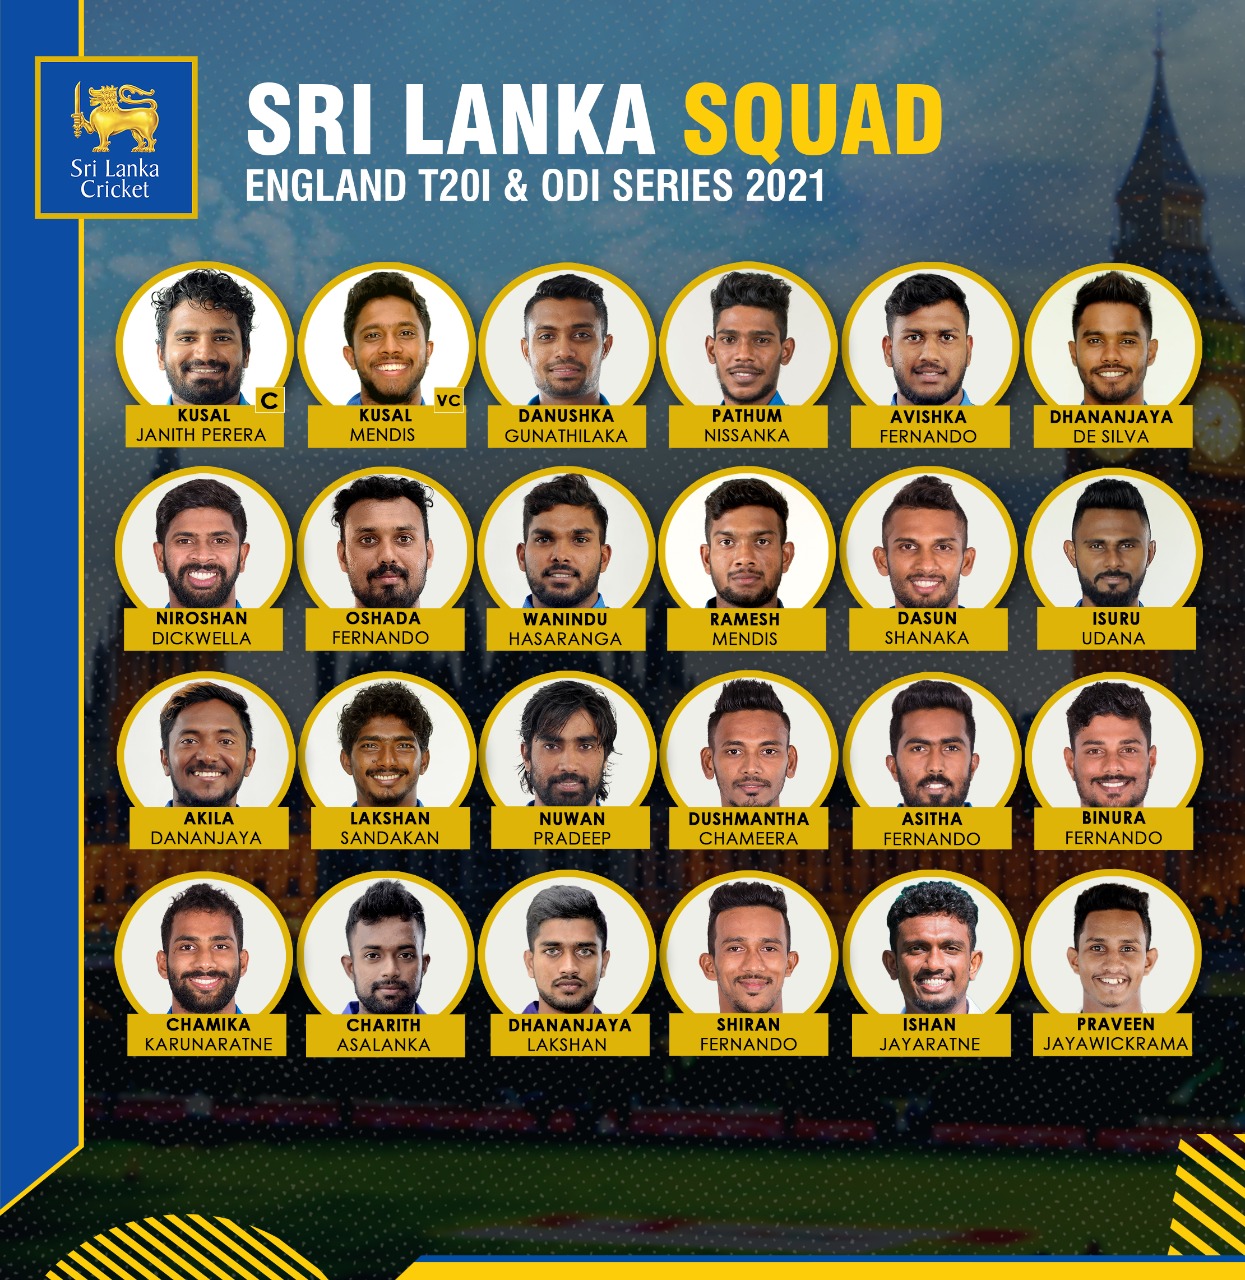 Sri Lanka announced 24 member squad for England T20I and ODI Cricket series